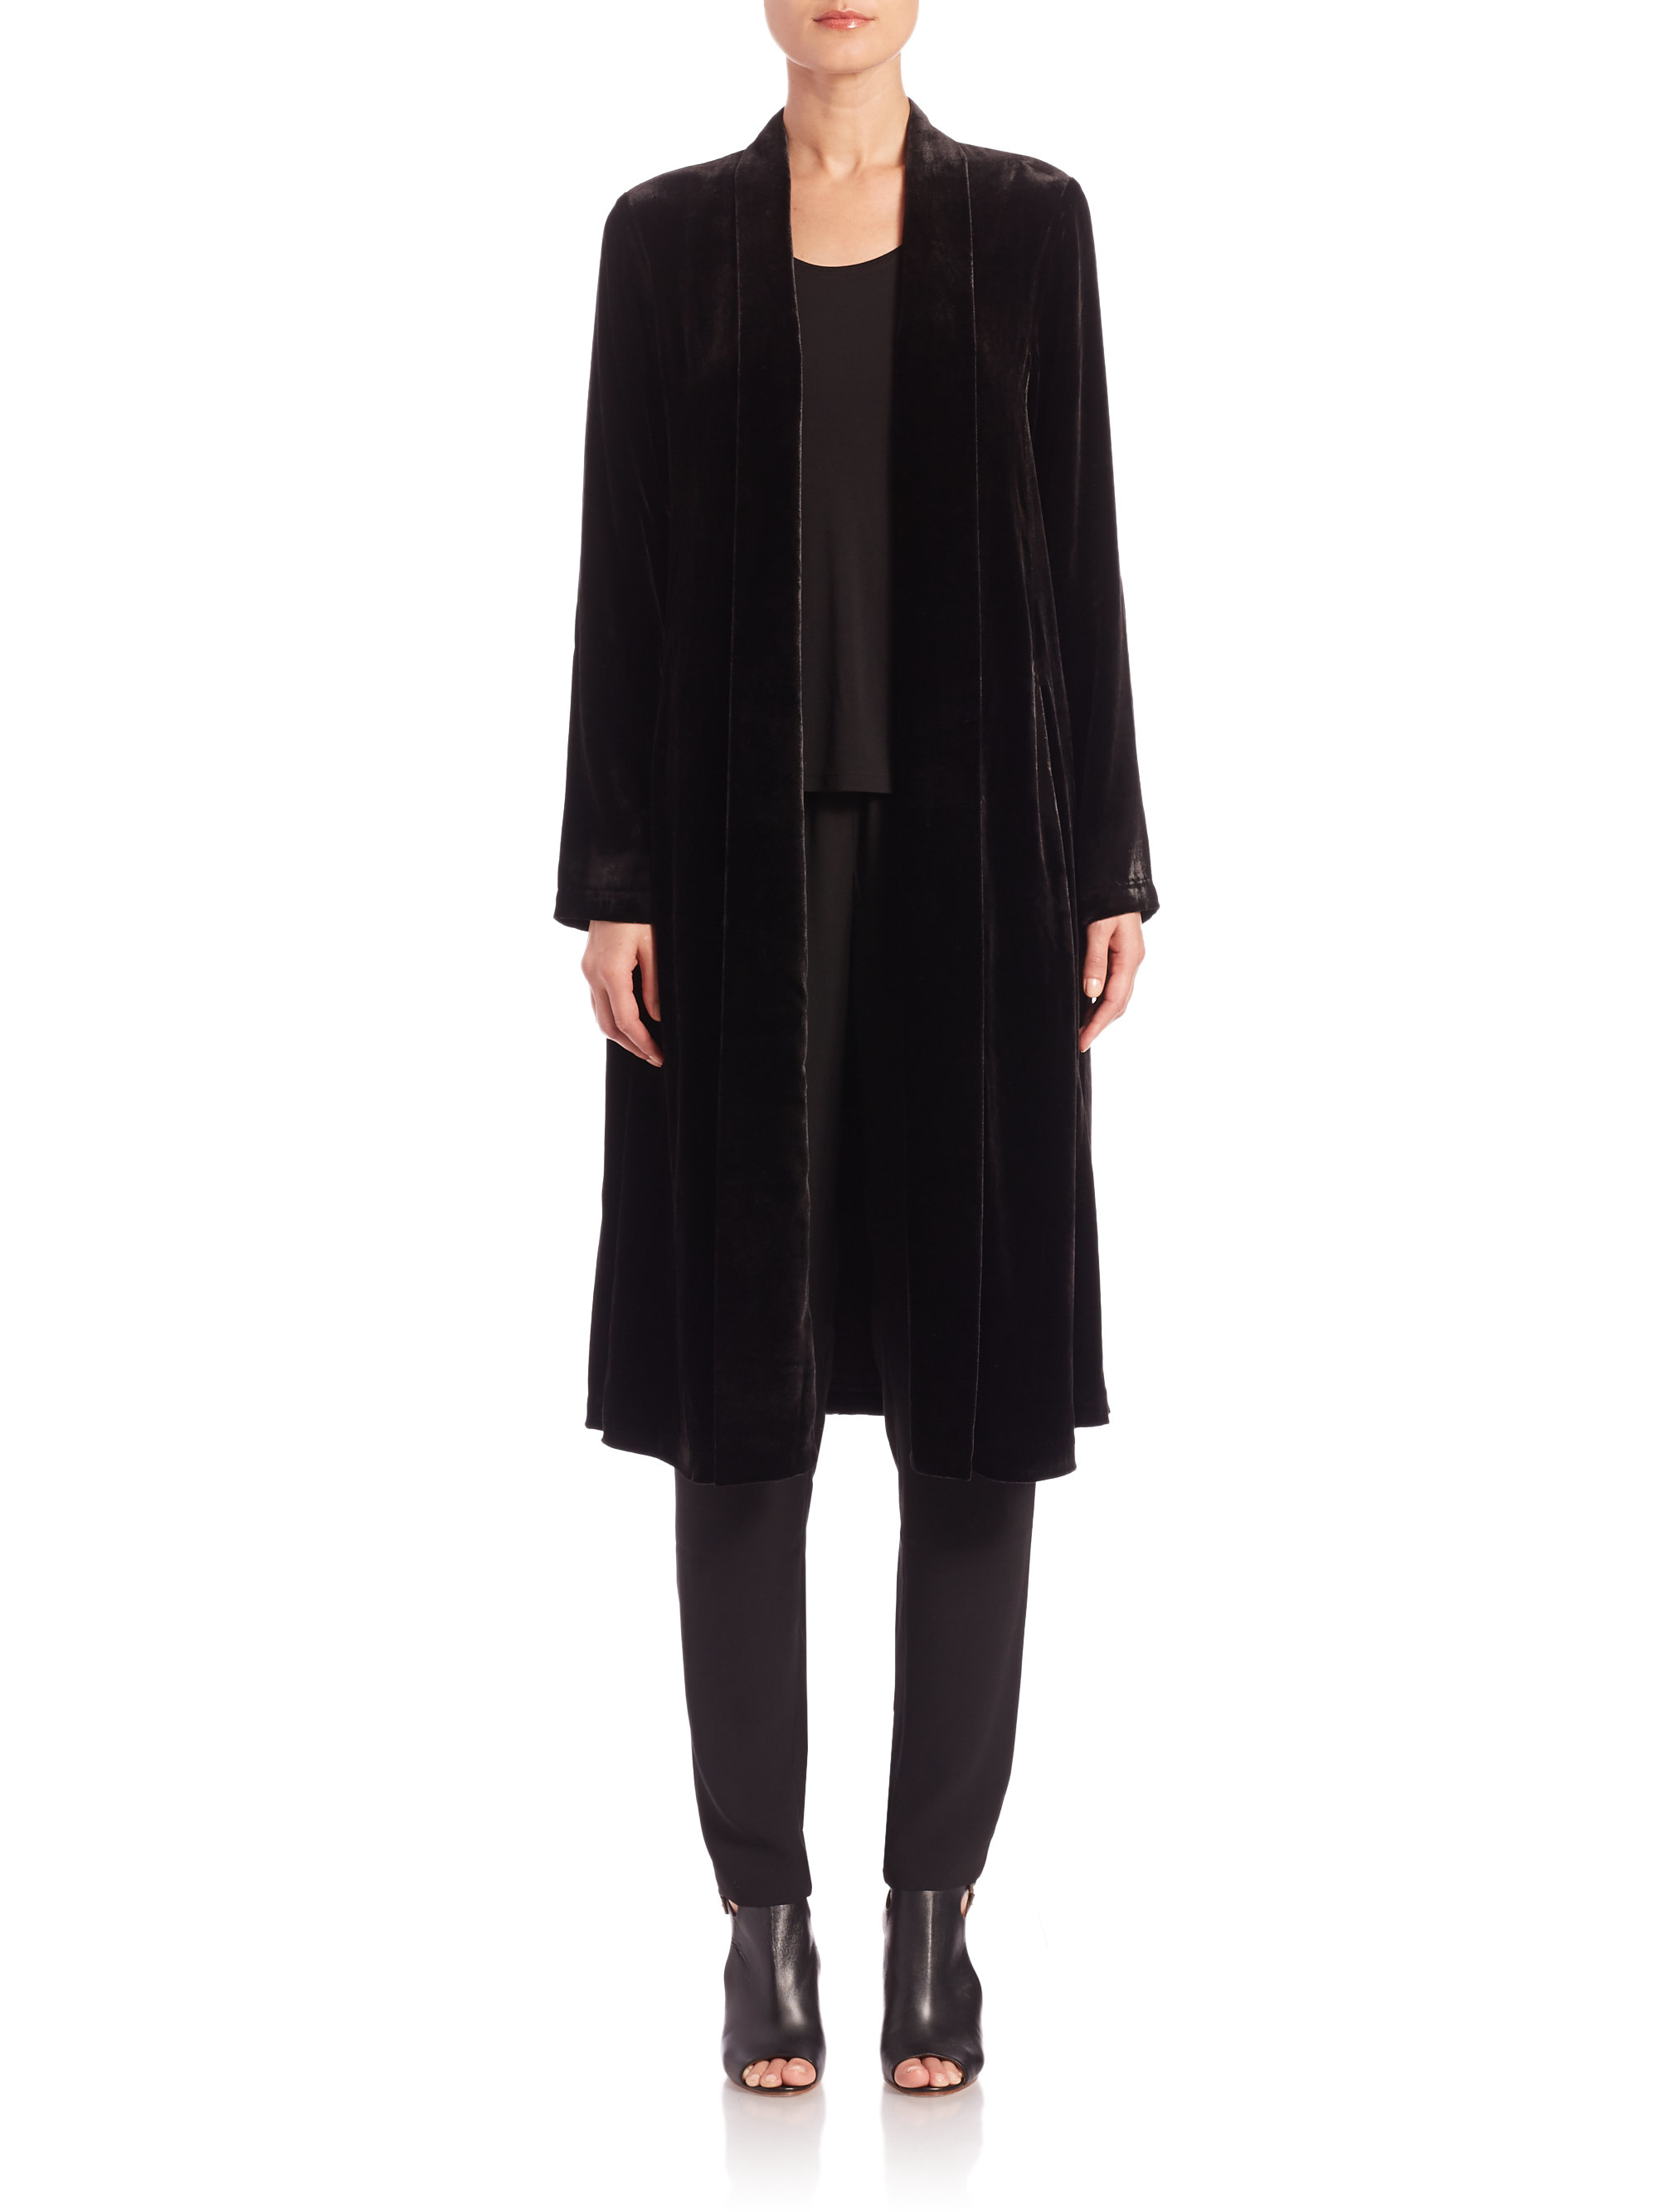 Lyst - Eileen Fisher Velvet Long Open-front Jacket in Black